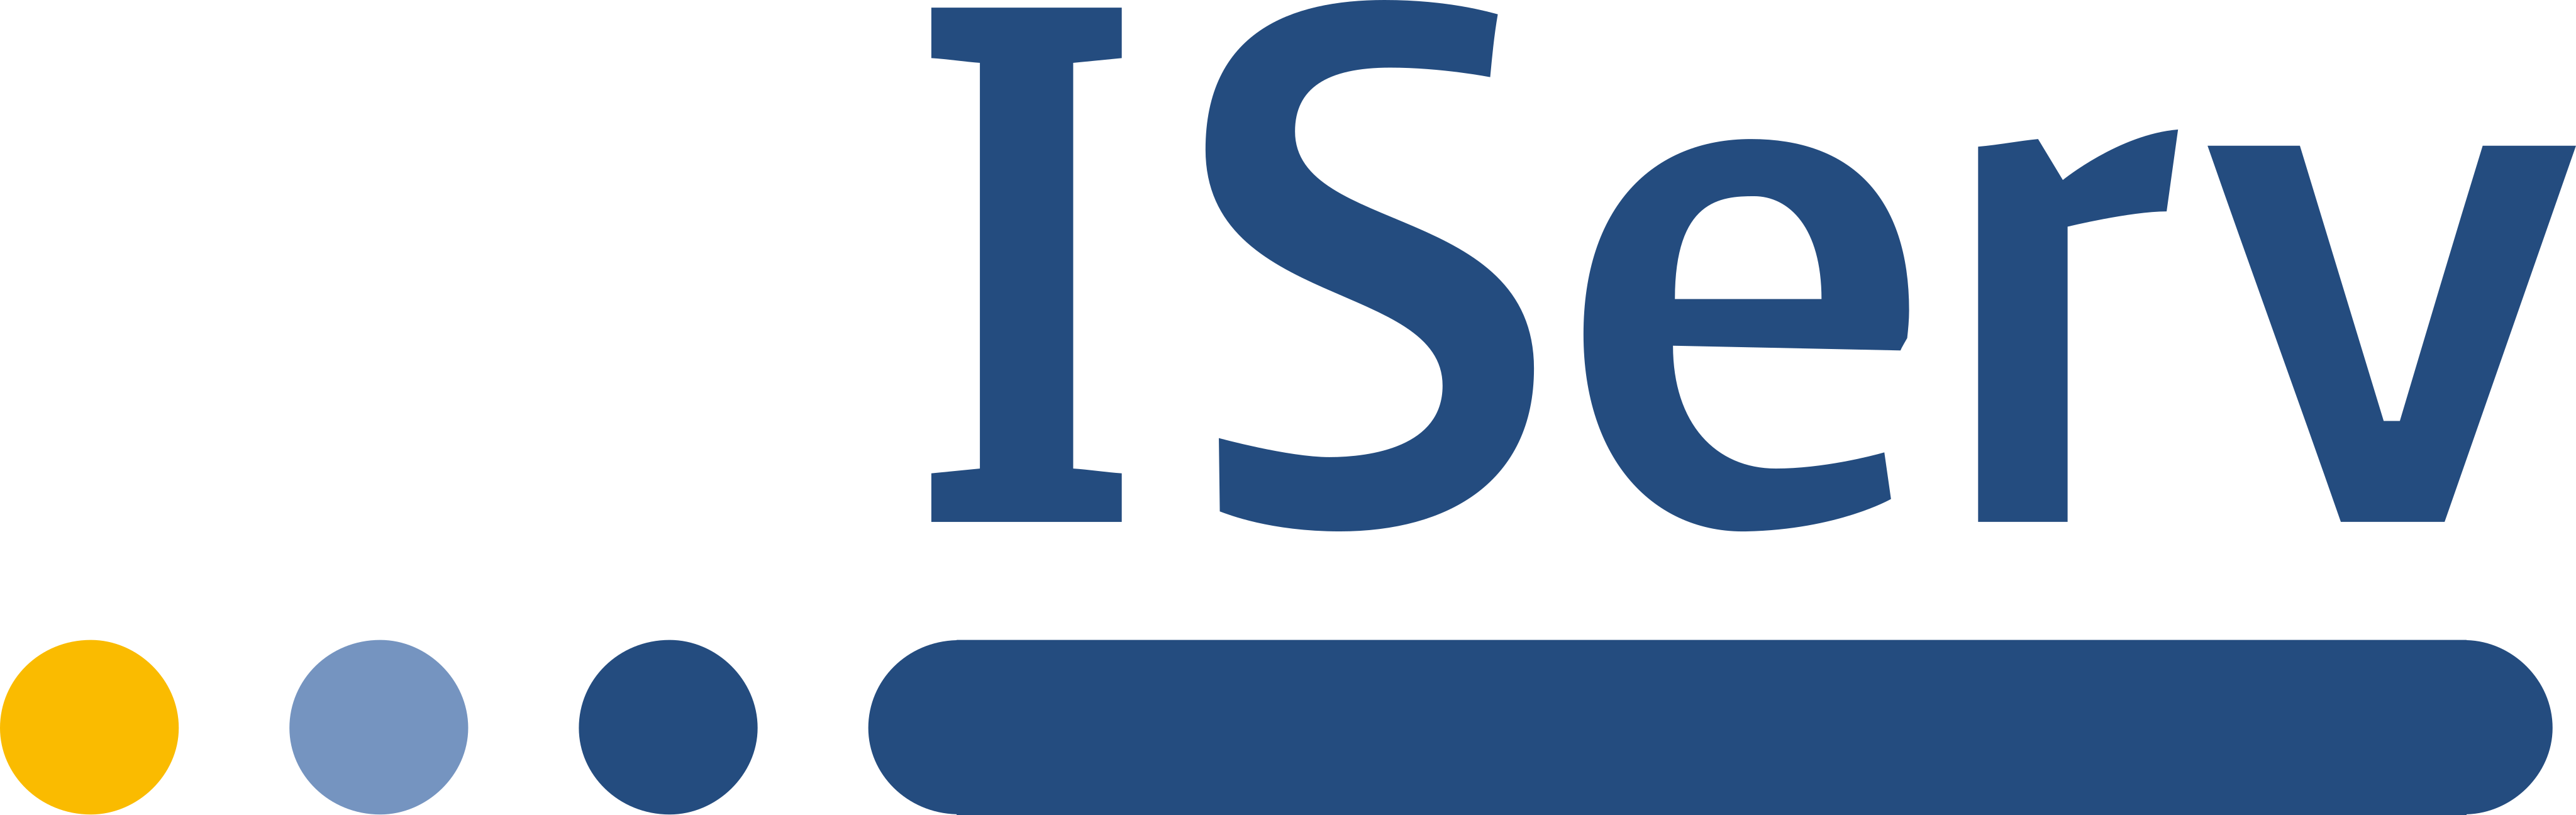 IServ Logo klein RGB clean